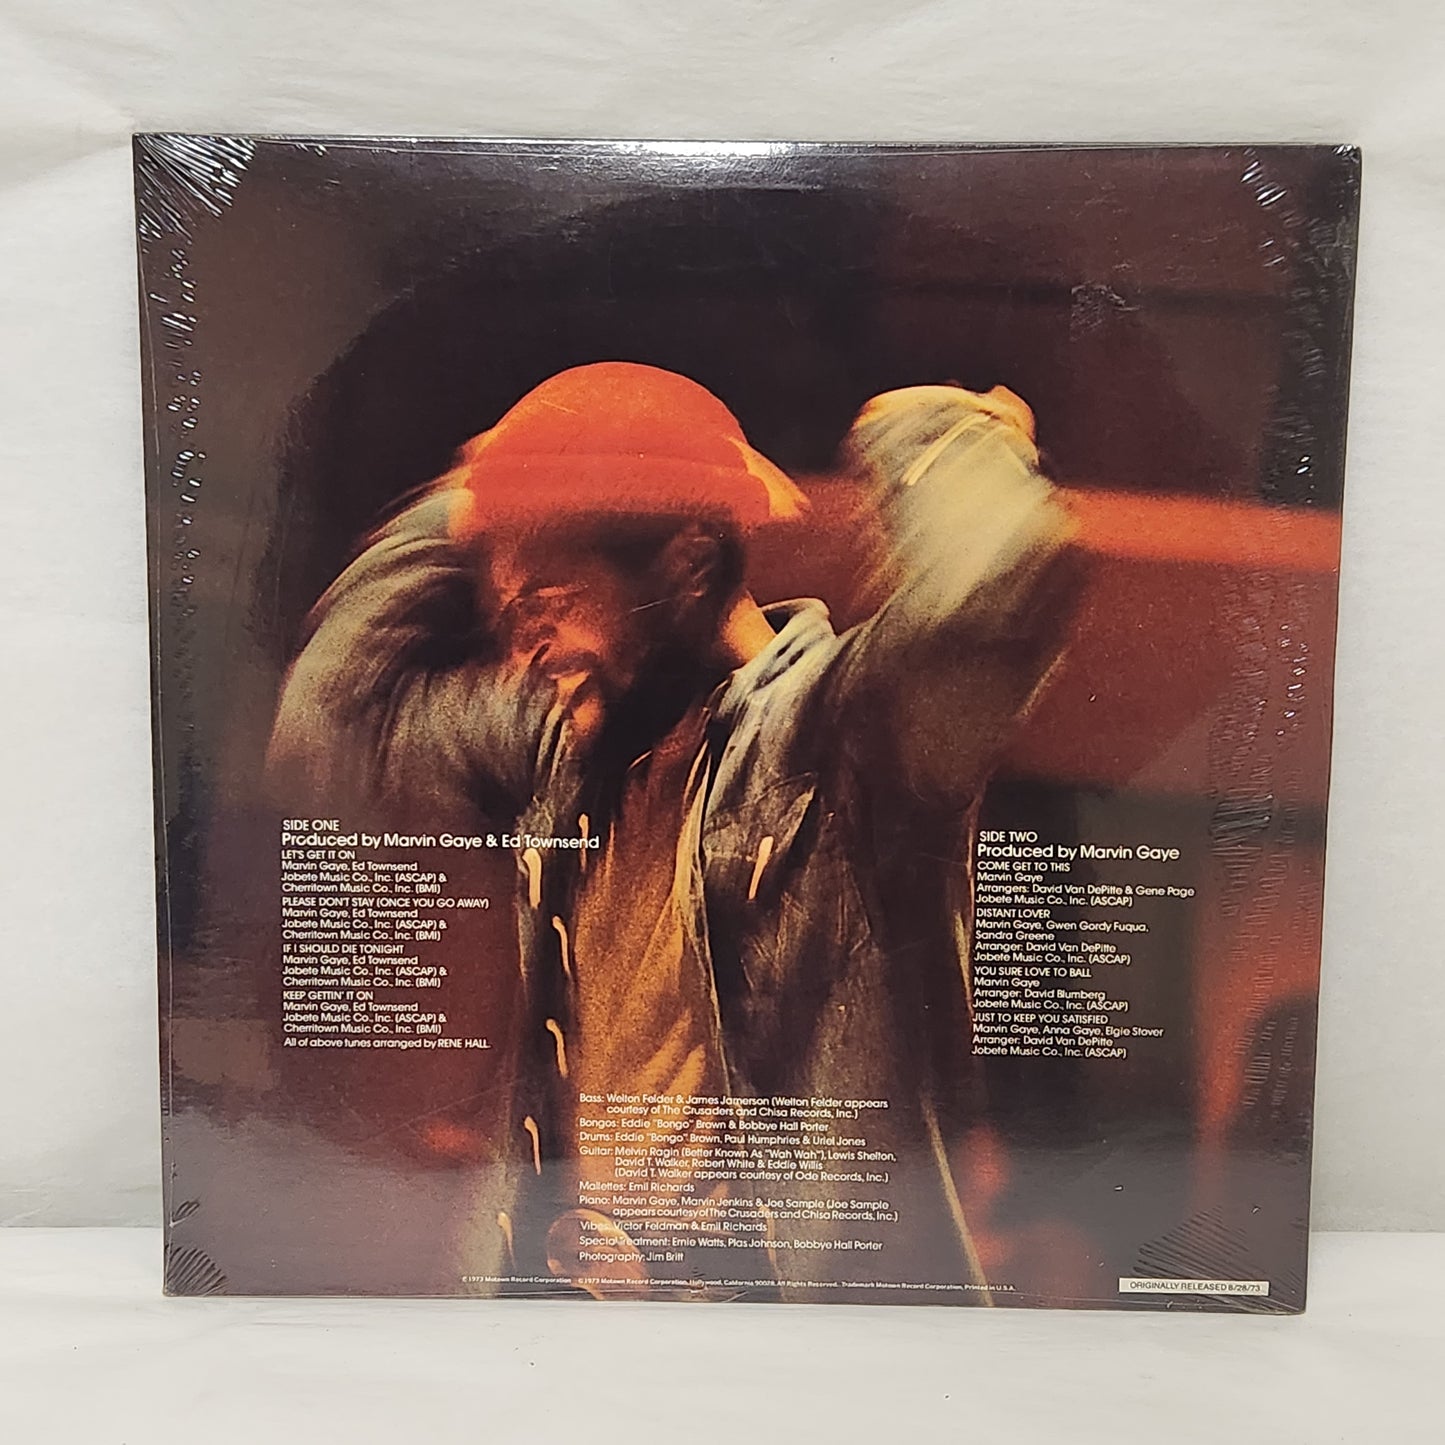 SEALED Marvin Gaye "Let's Get It On" 1981 Motown Reissue Funk & Soul Album